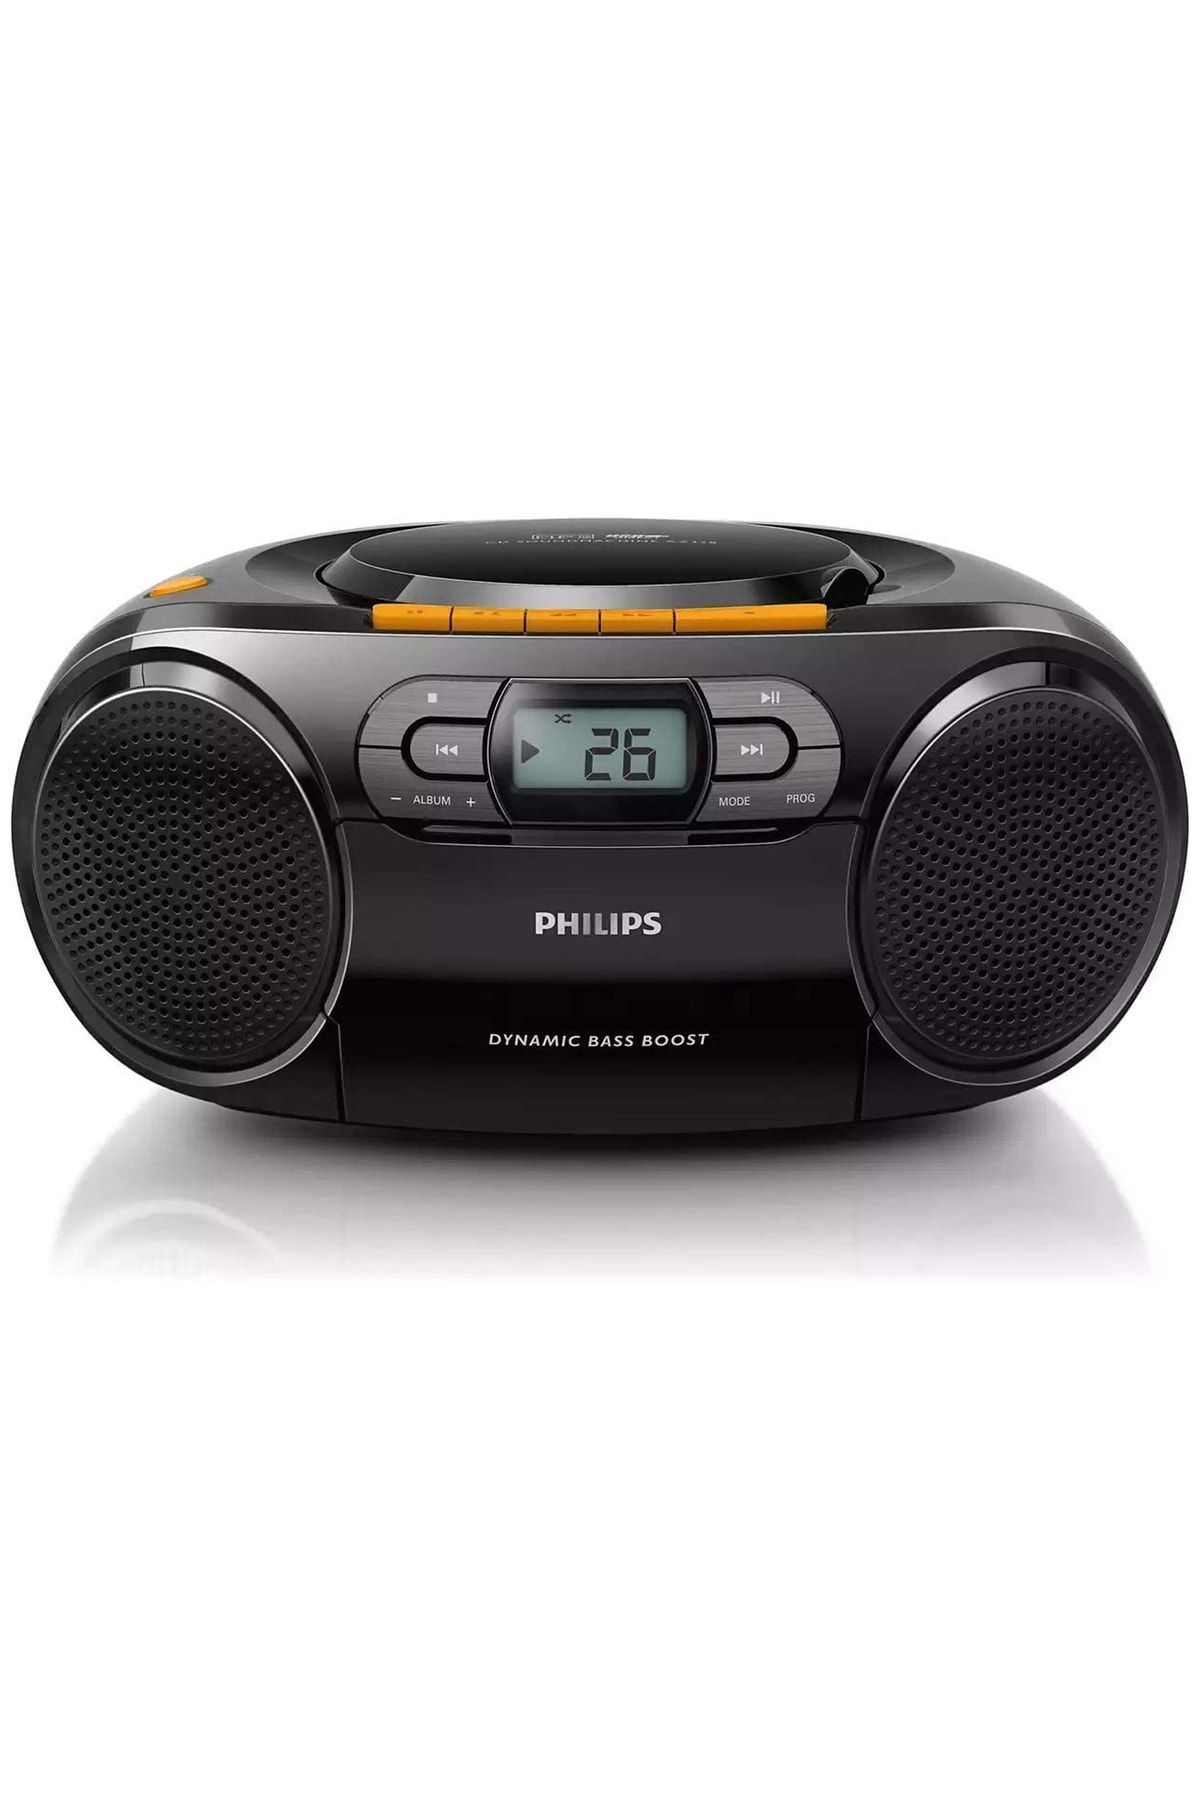 Philips Stereo Cd Kaset Çalar, Taşınabilir Boombox, Usb, Fm, Mp3, Tape, Siyah